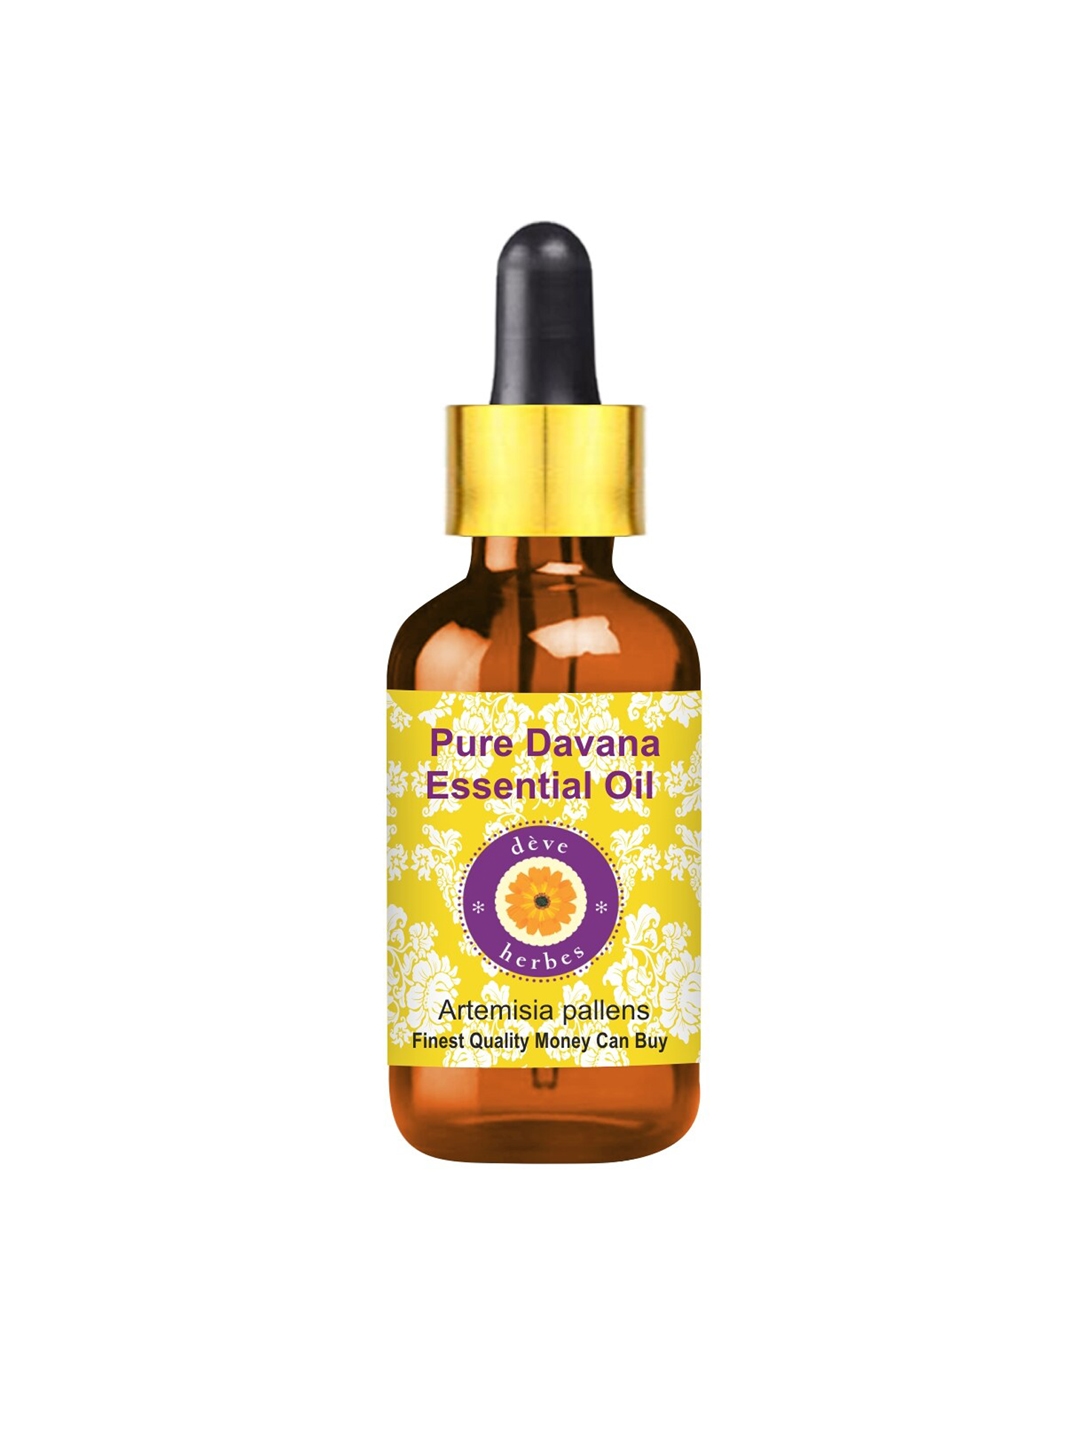 Deve Herbes Pure Davana Essential Oil 100% Natural Therapeutic Grade 10ml